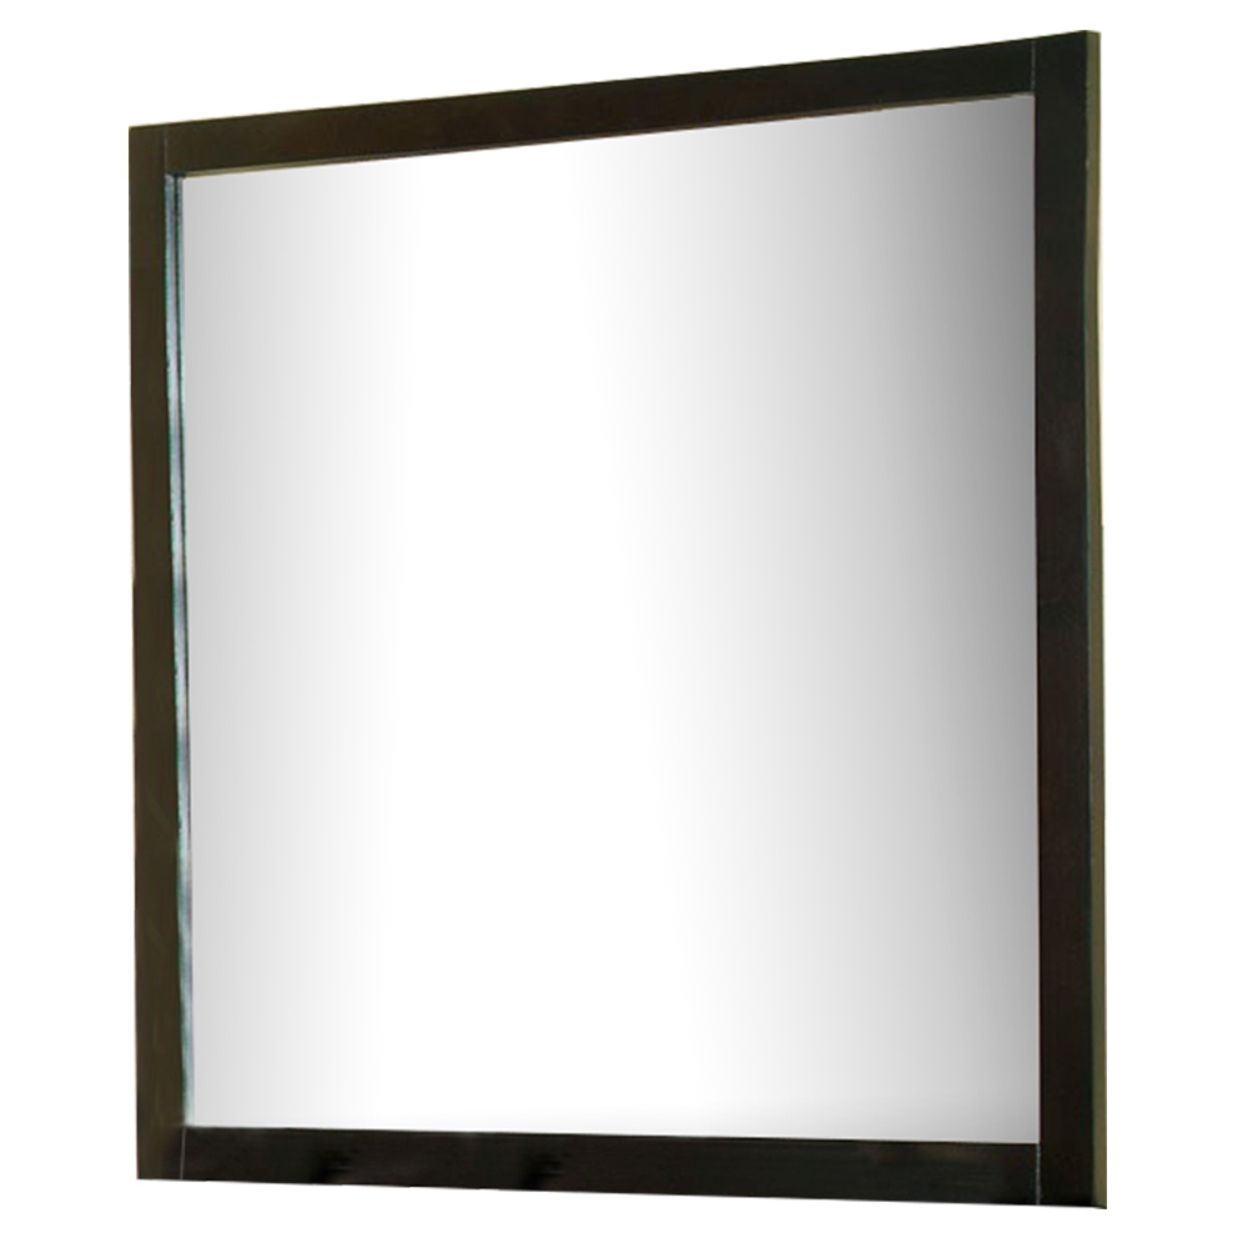 Contemporary Mirror With Wooden Frame, Espresso Brown- Saltoro Sherpi